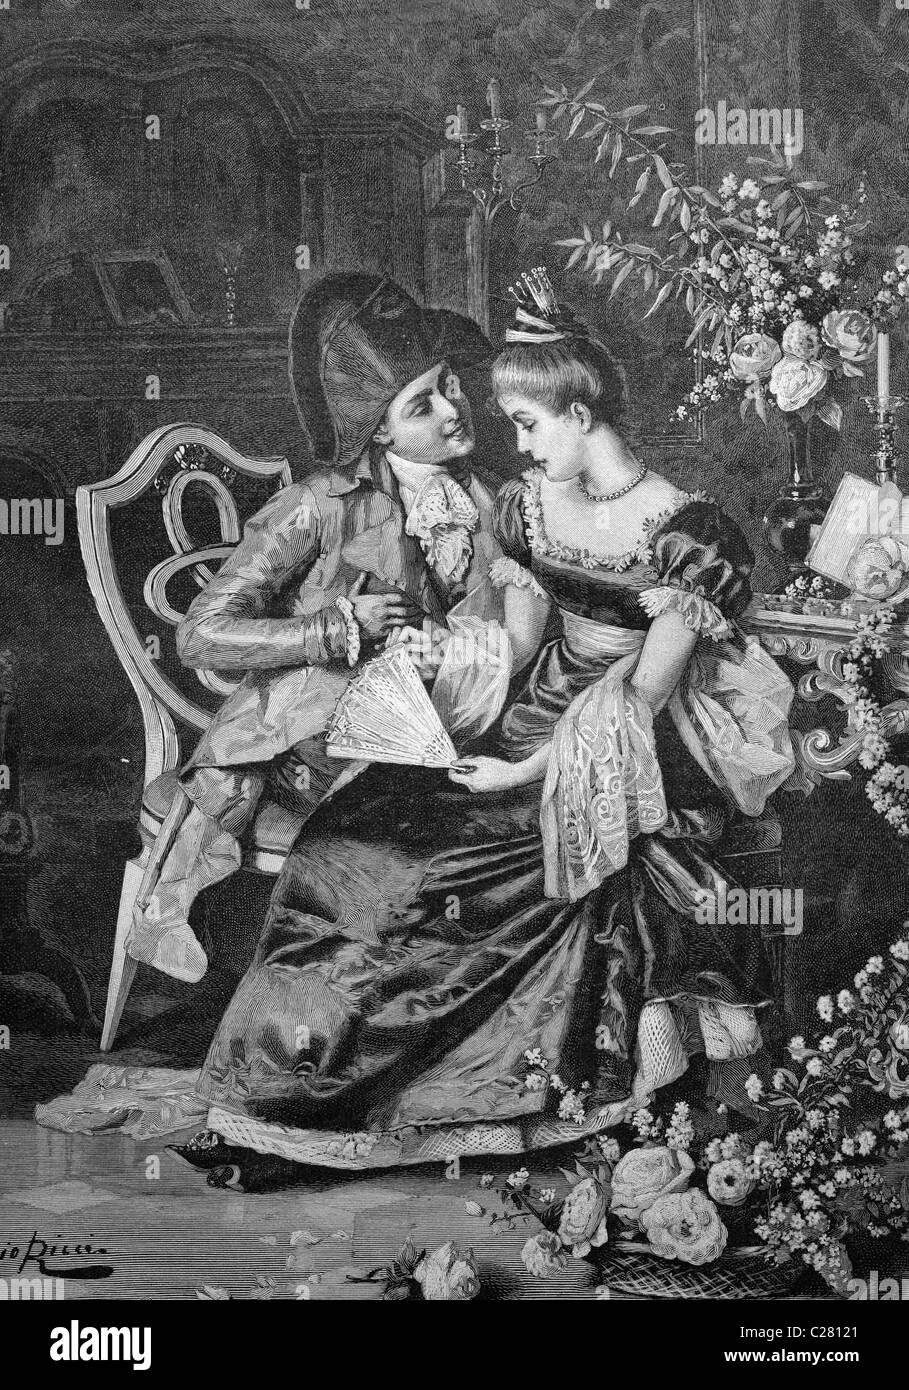 Declaration of love, historical illustration, ca. 1893 Stock Photo